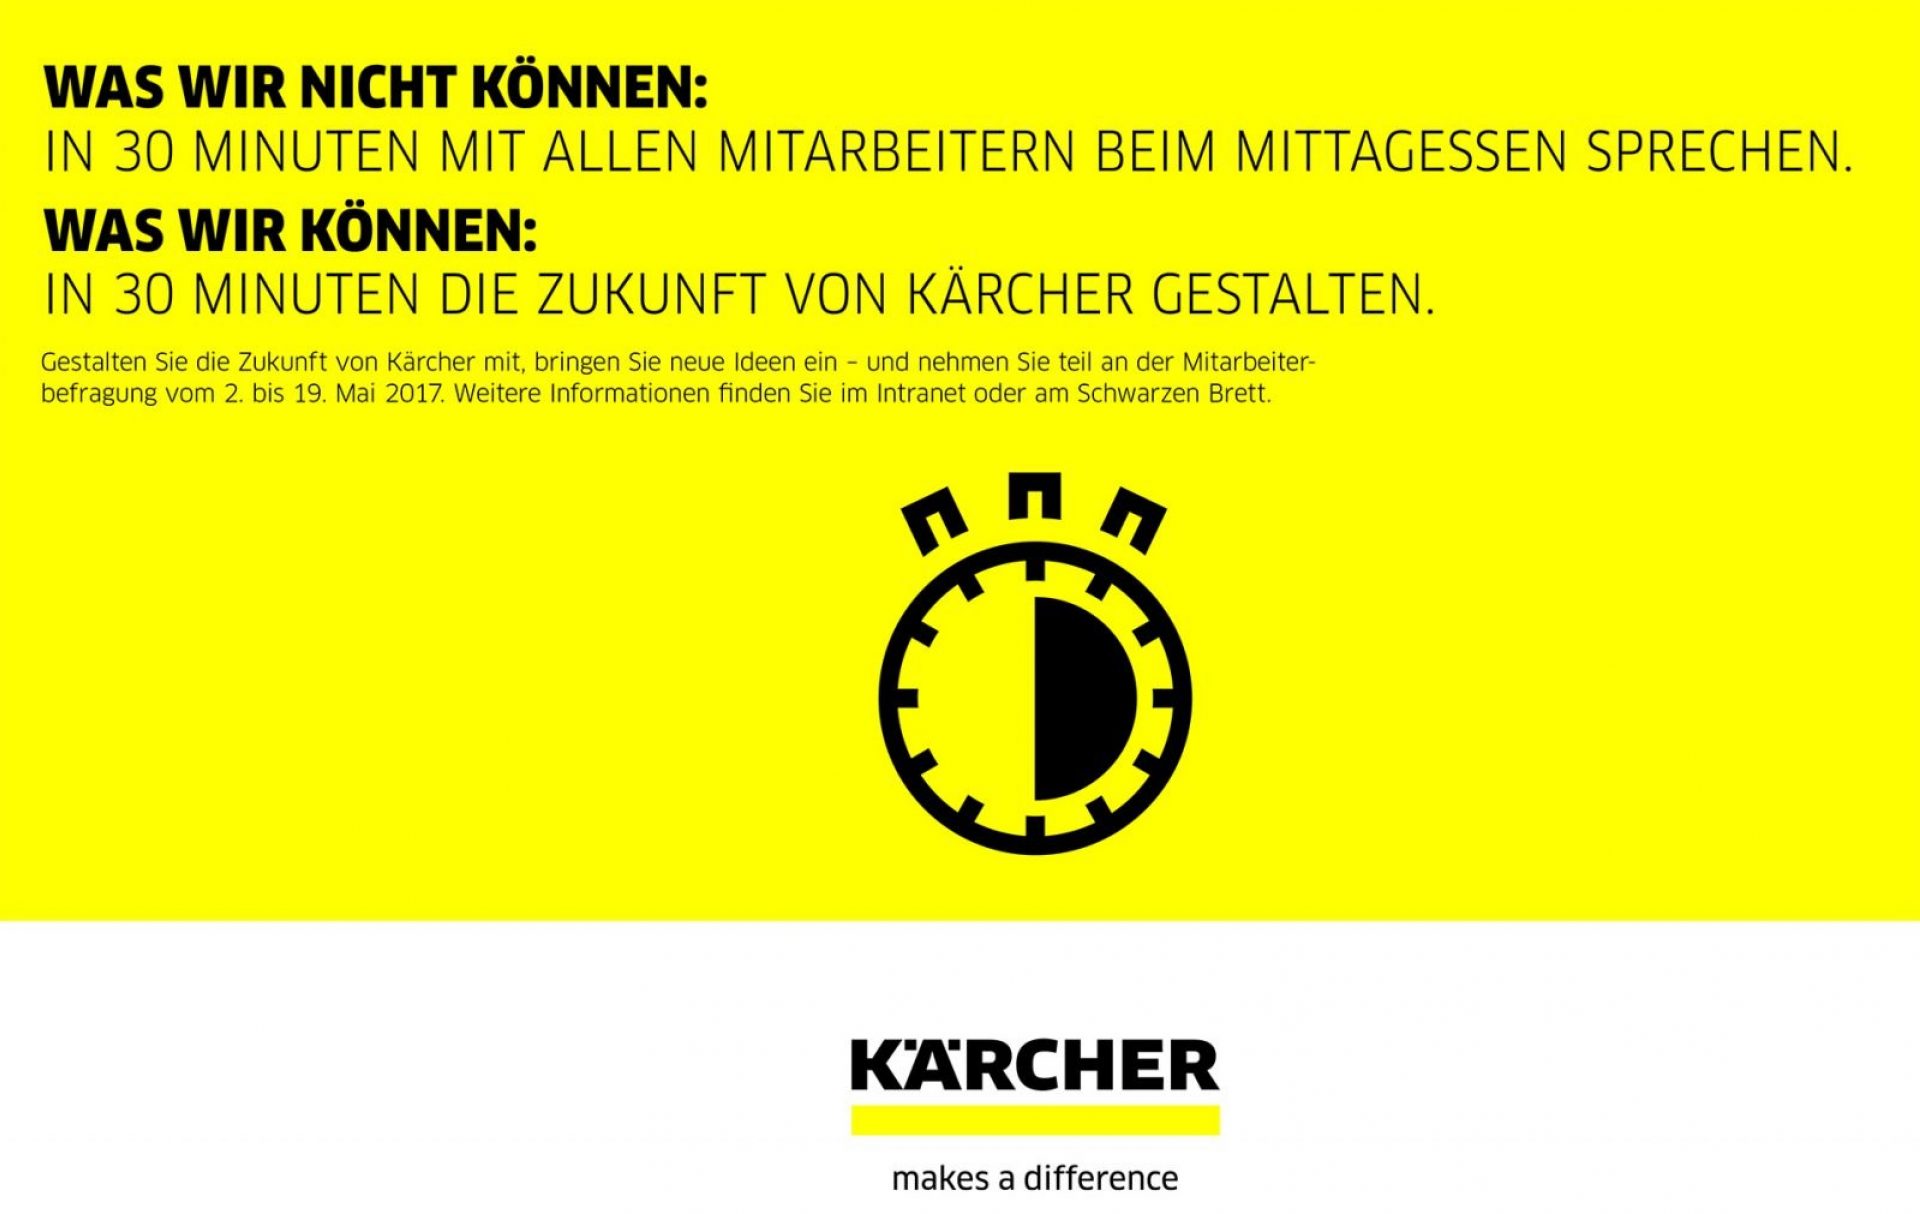 30 minutes for Kärcher